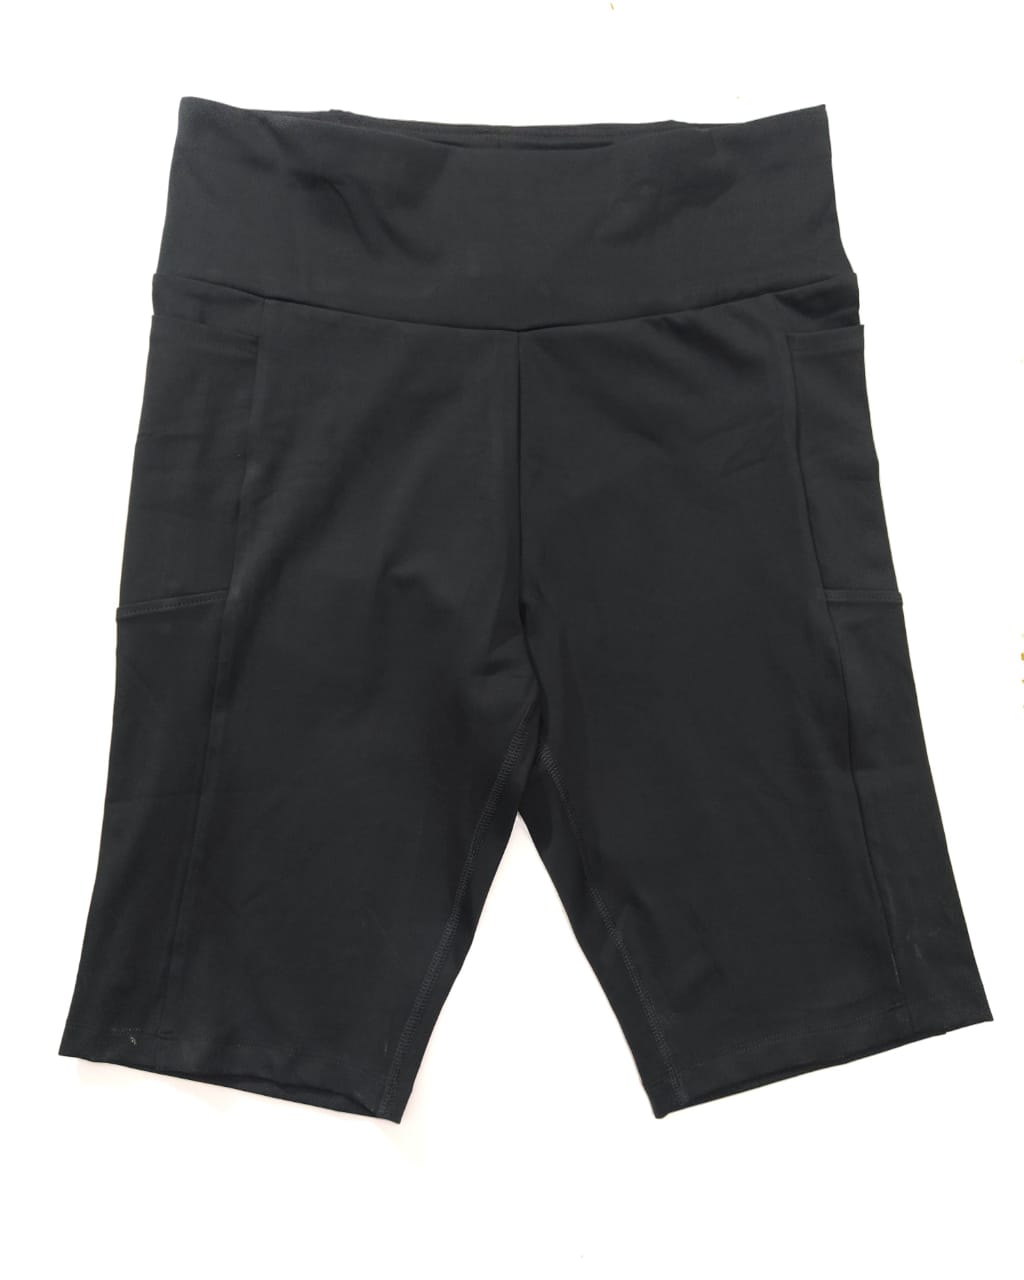 Crane Fitness Short with pocket- Black